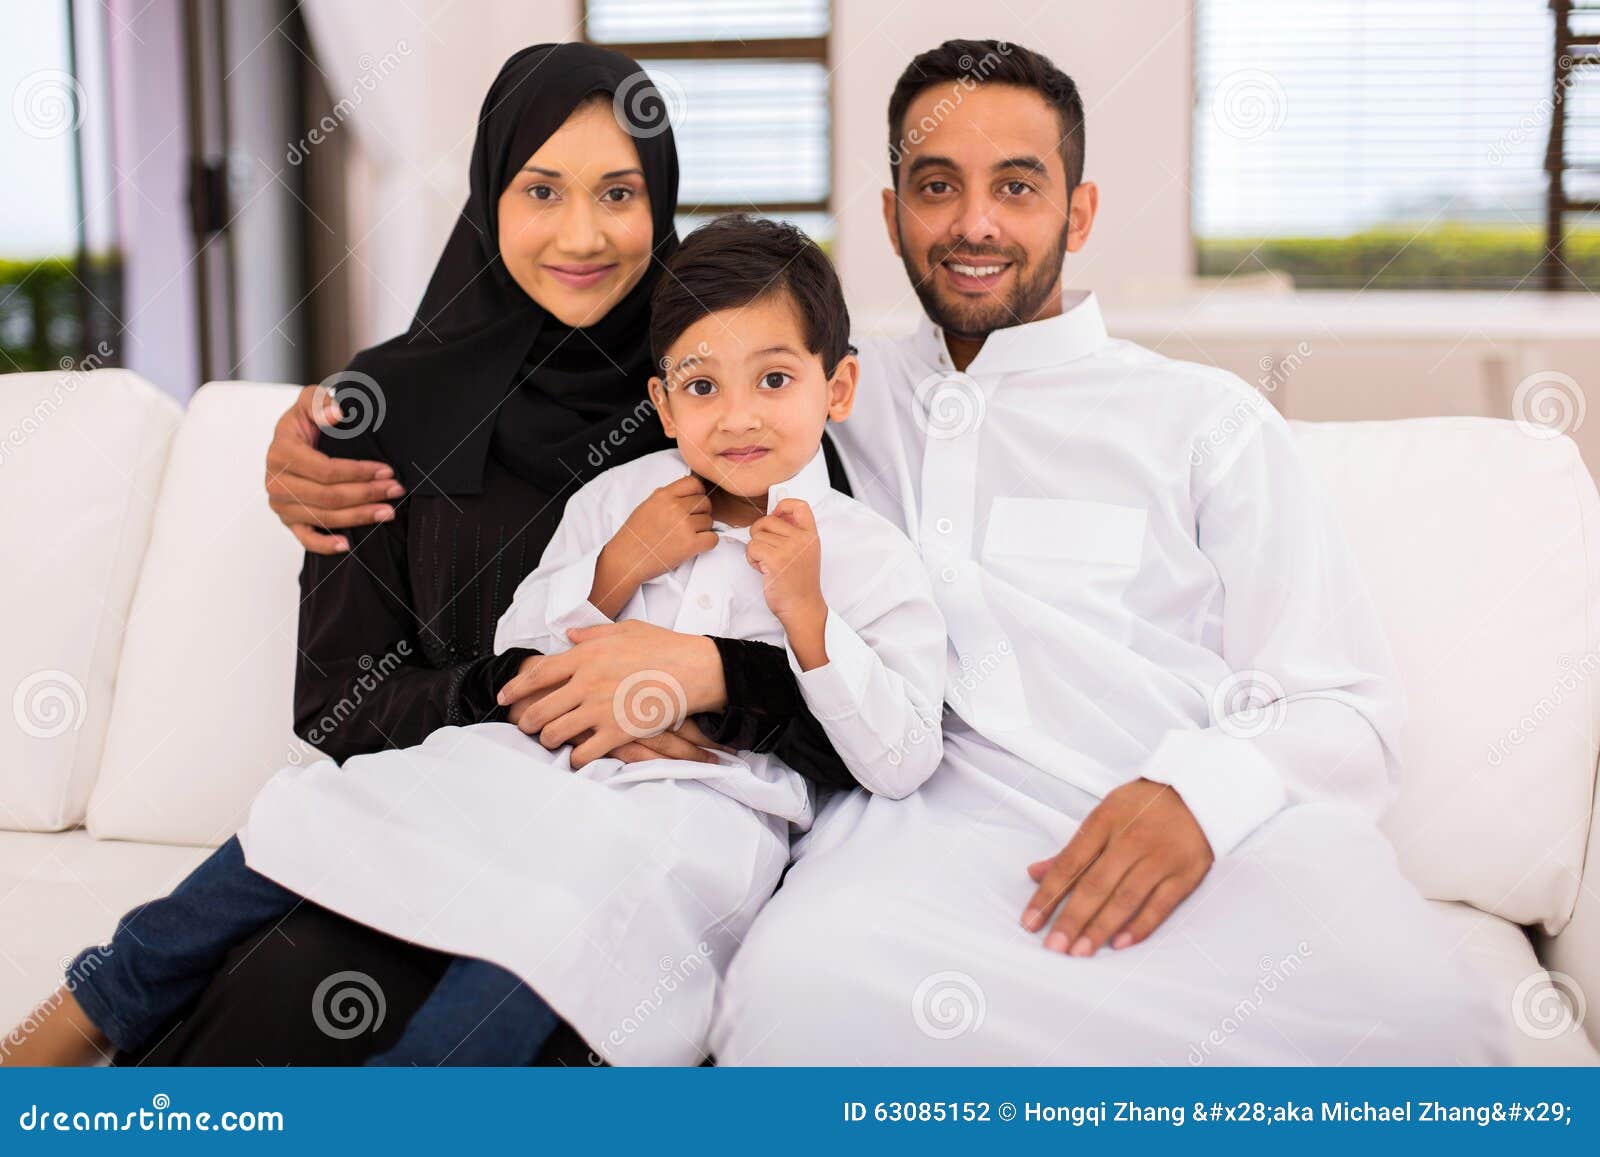 23,676 Muslim Family Photos - Free & Royalty-Free Stock Photos from